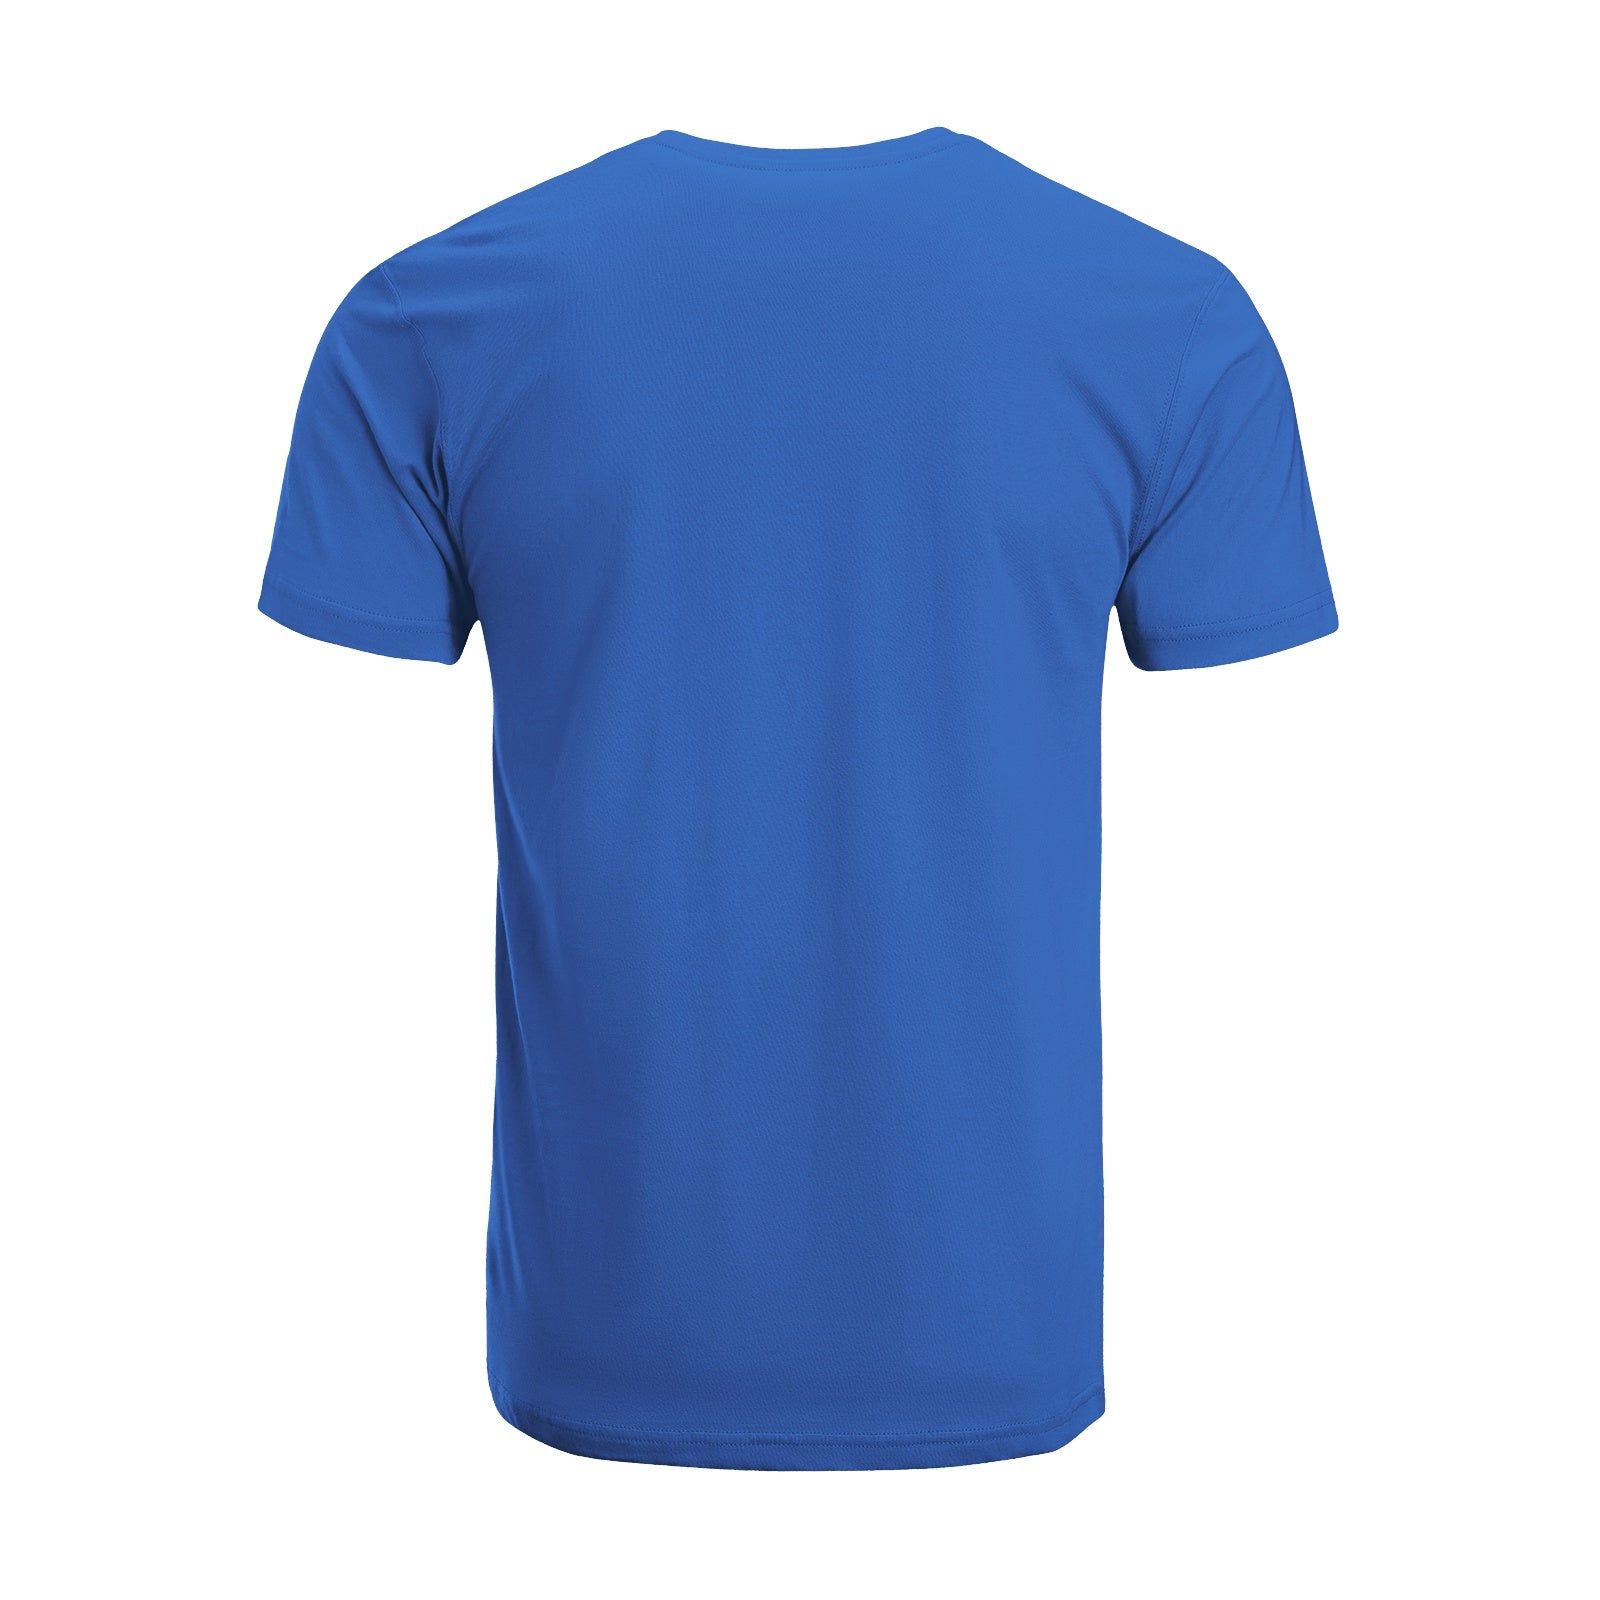 Unisex Short Sleeve Crew Neck Cotton Jersey T-Shirt CAT 32 - Tara-Outfits.com